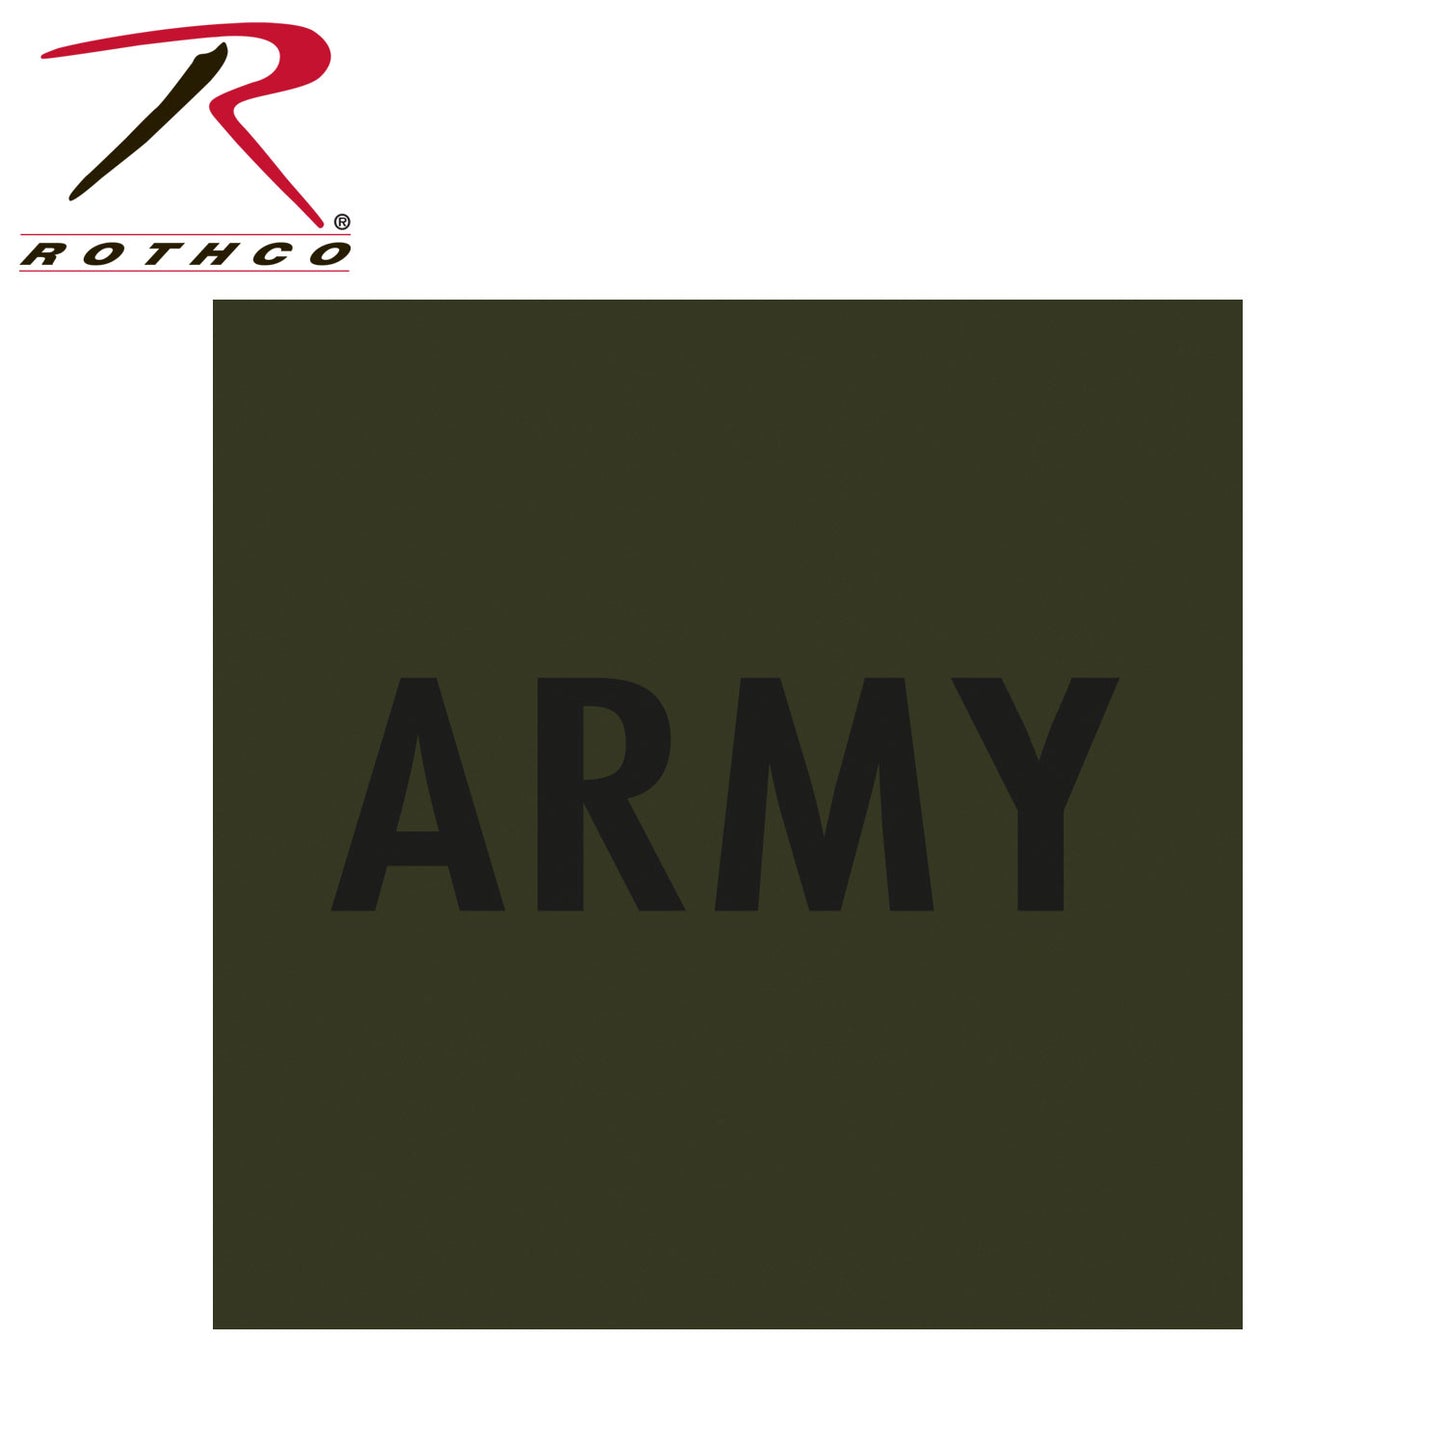 'Army' Physical Training T-Shirt